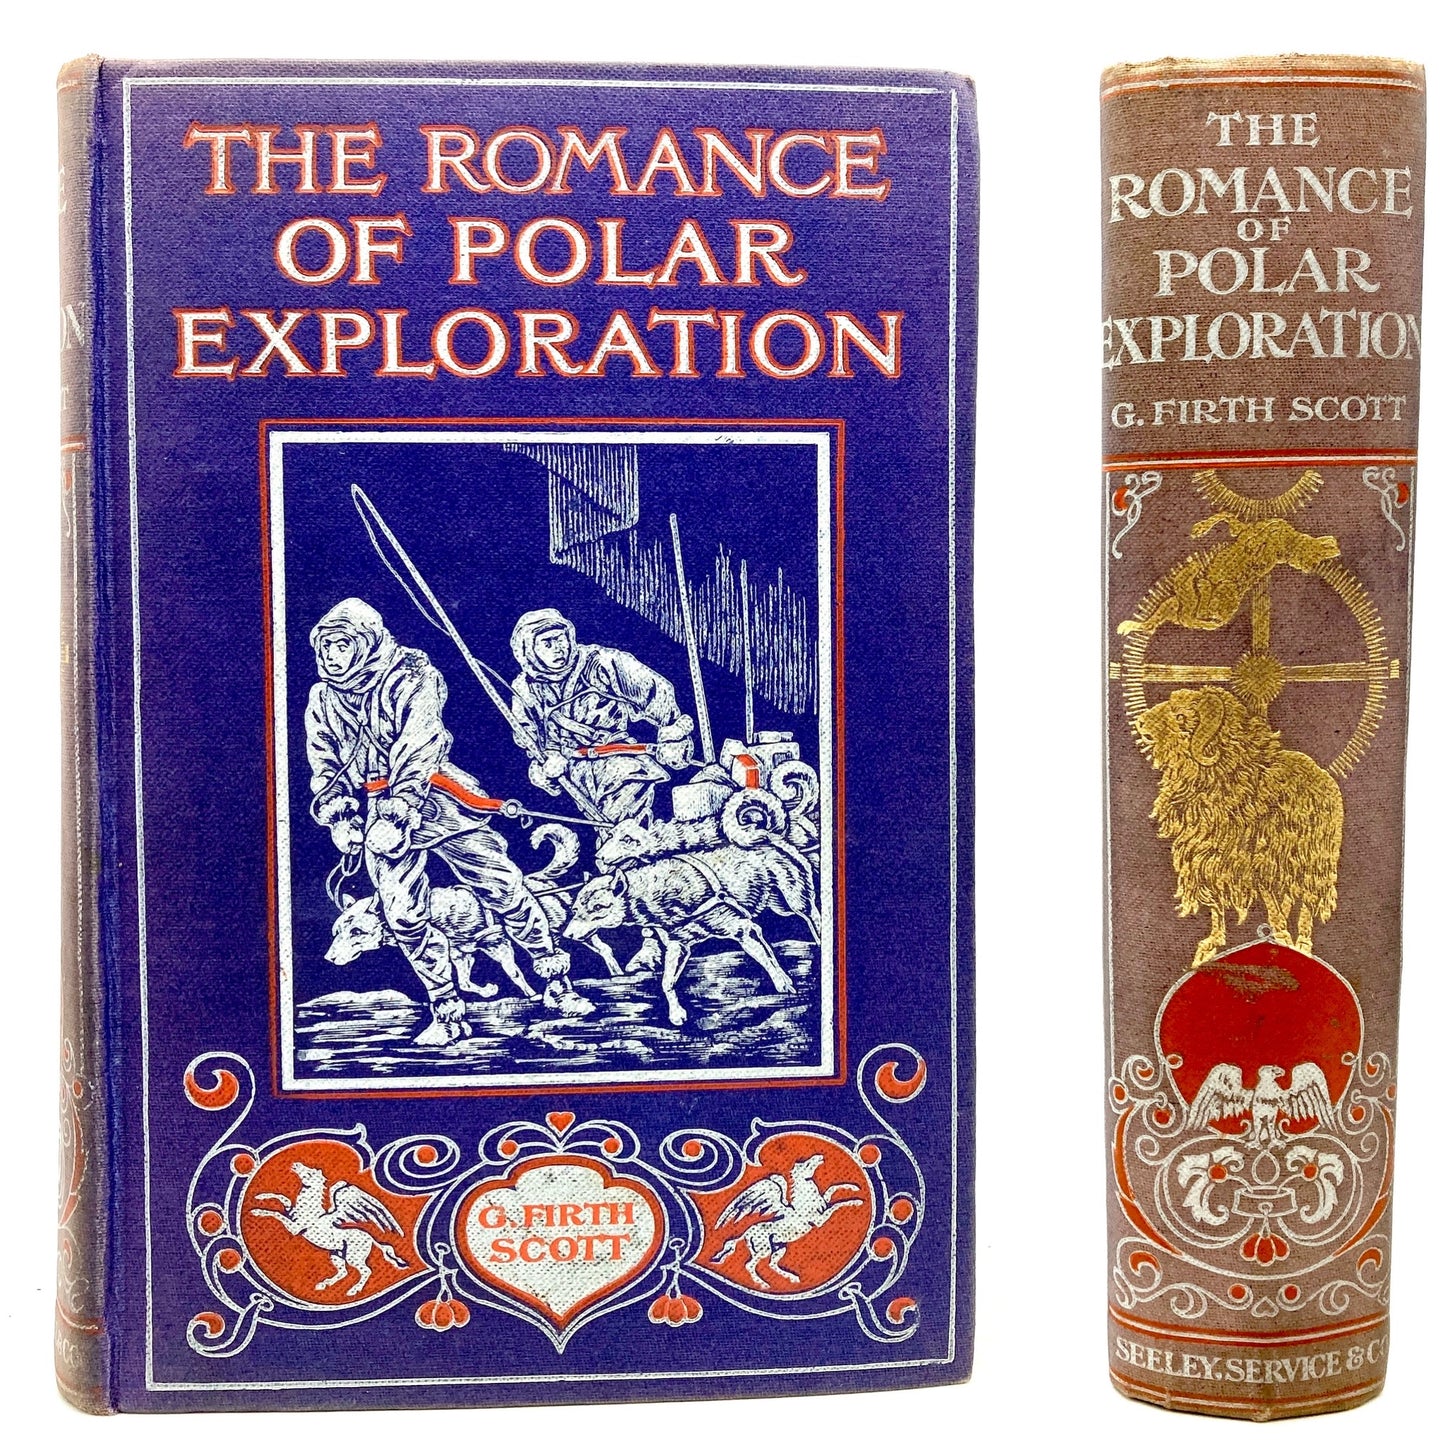 SCOTT, G. Firth "The Romance of Polar Exploration" [Seeley Service & Co, c1923]